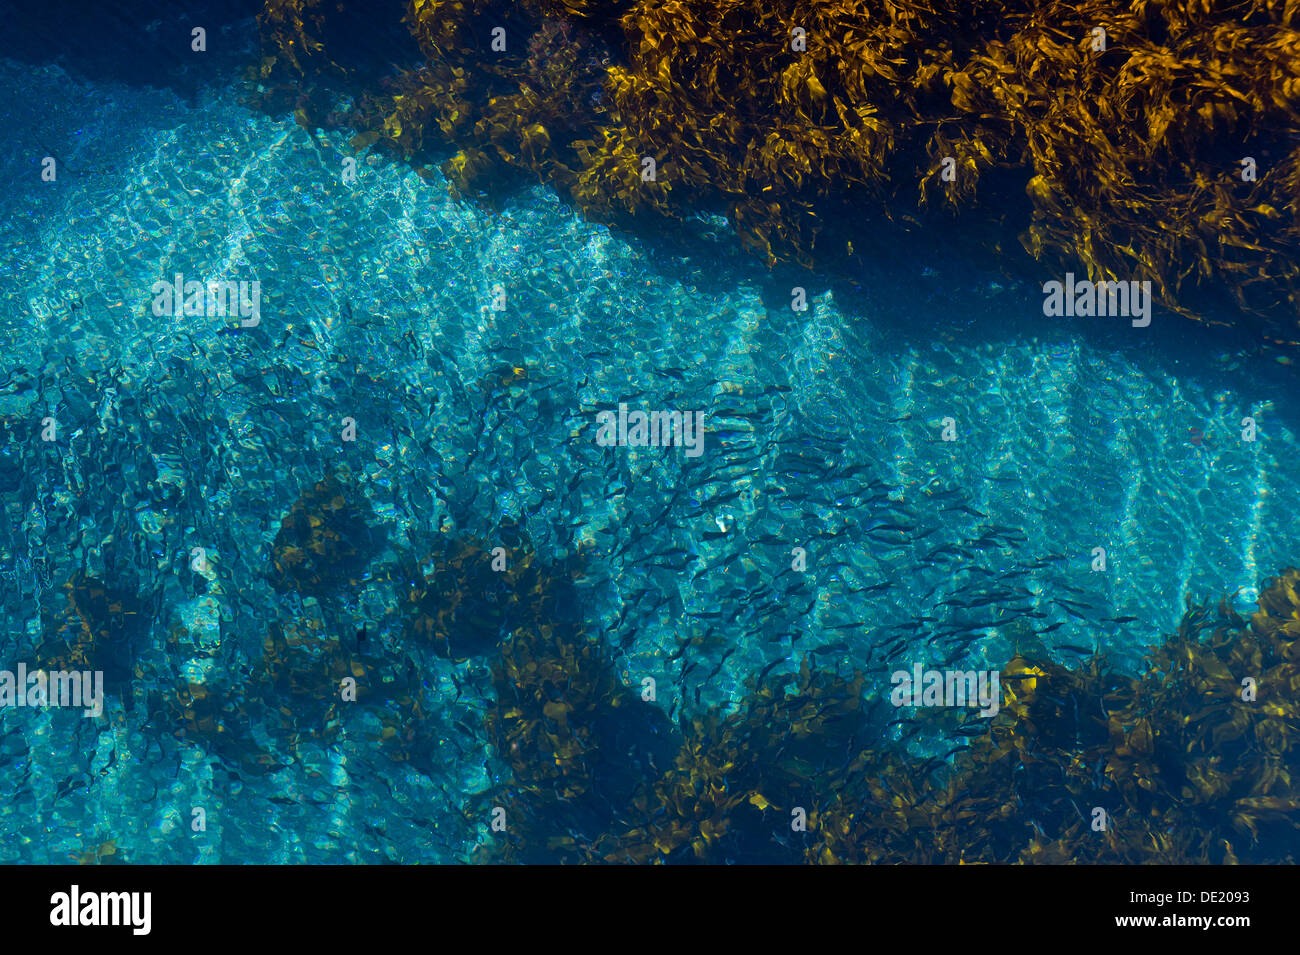 Fischschwarm im blauen Meer Gjogv, Eysturoy, Färöer Inseln, Dänemark Stockfoto